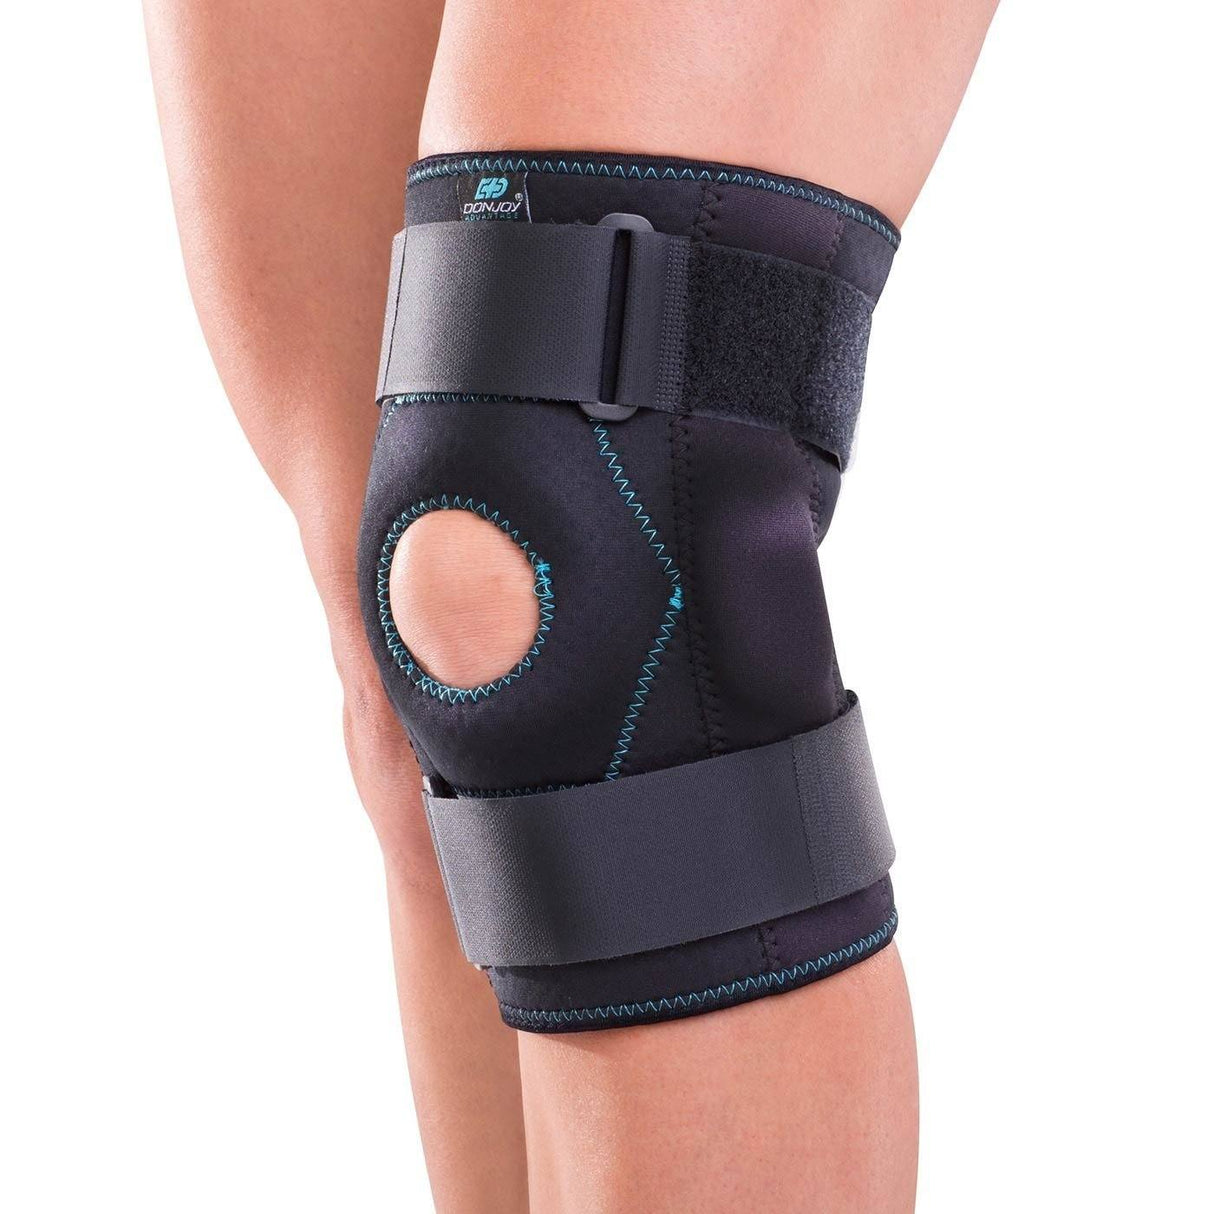 Image of DJO Advantage Sport Stabilized Hinged Orthopedic Wrap, 15" to 19" Knee, Large/XL